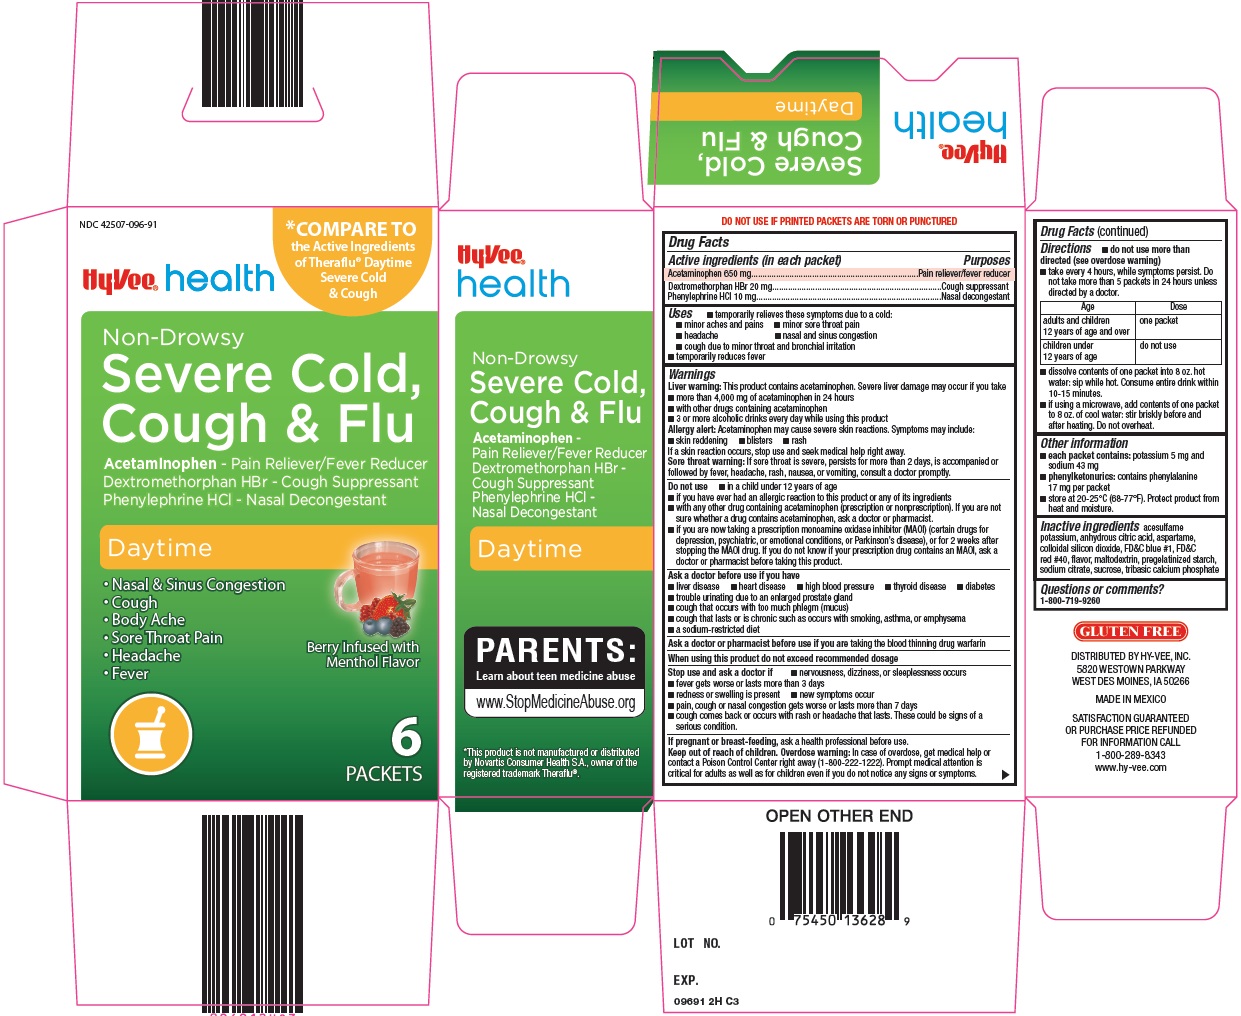 Severe Cold, Cough & Flu image